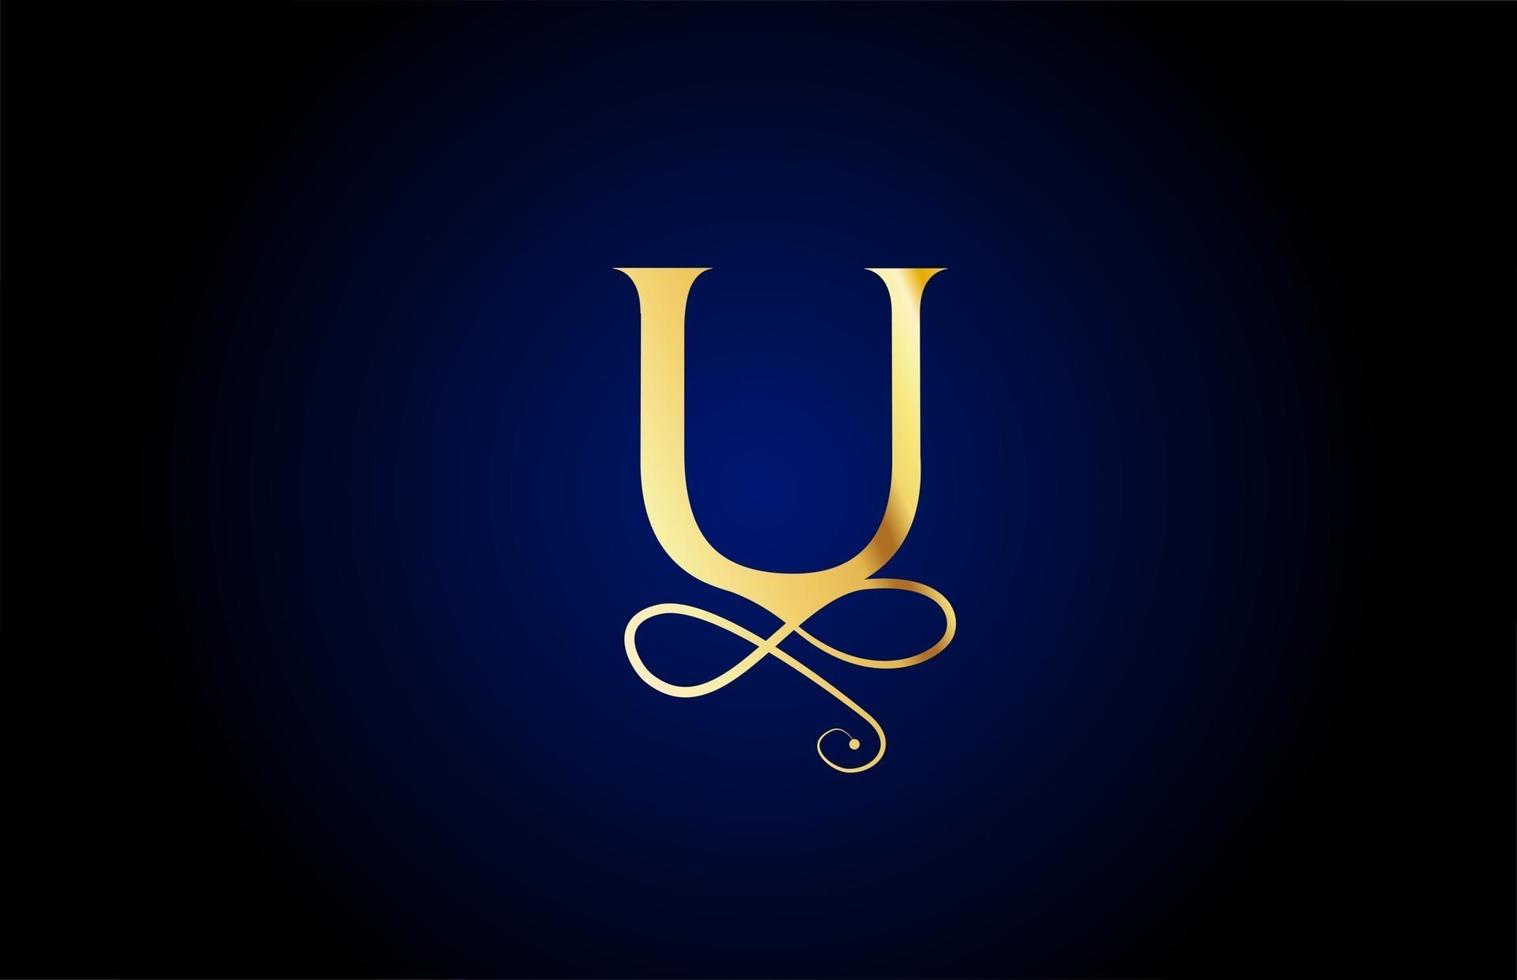 dourado u design de logotipo do ícone de letra do alfabeto de monograma elegante. vintage corporativo brading para produtos de luxo e empresa vetor